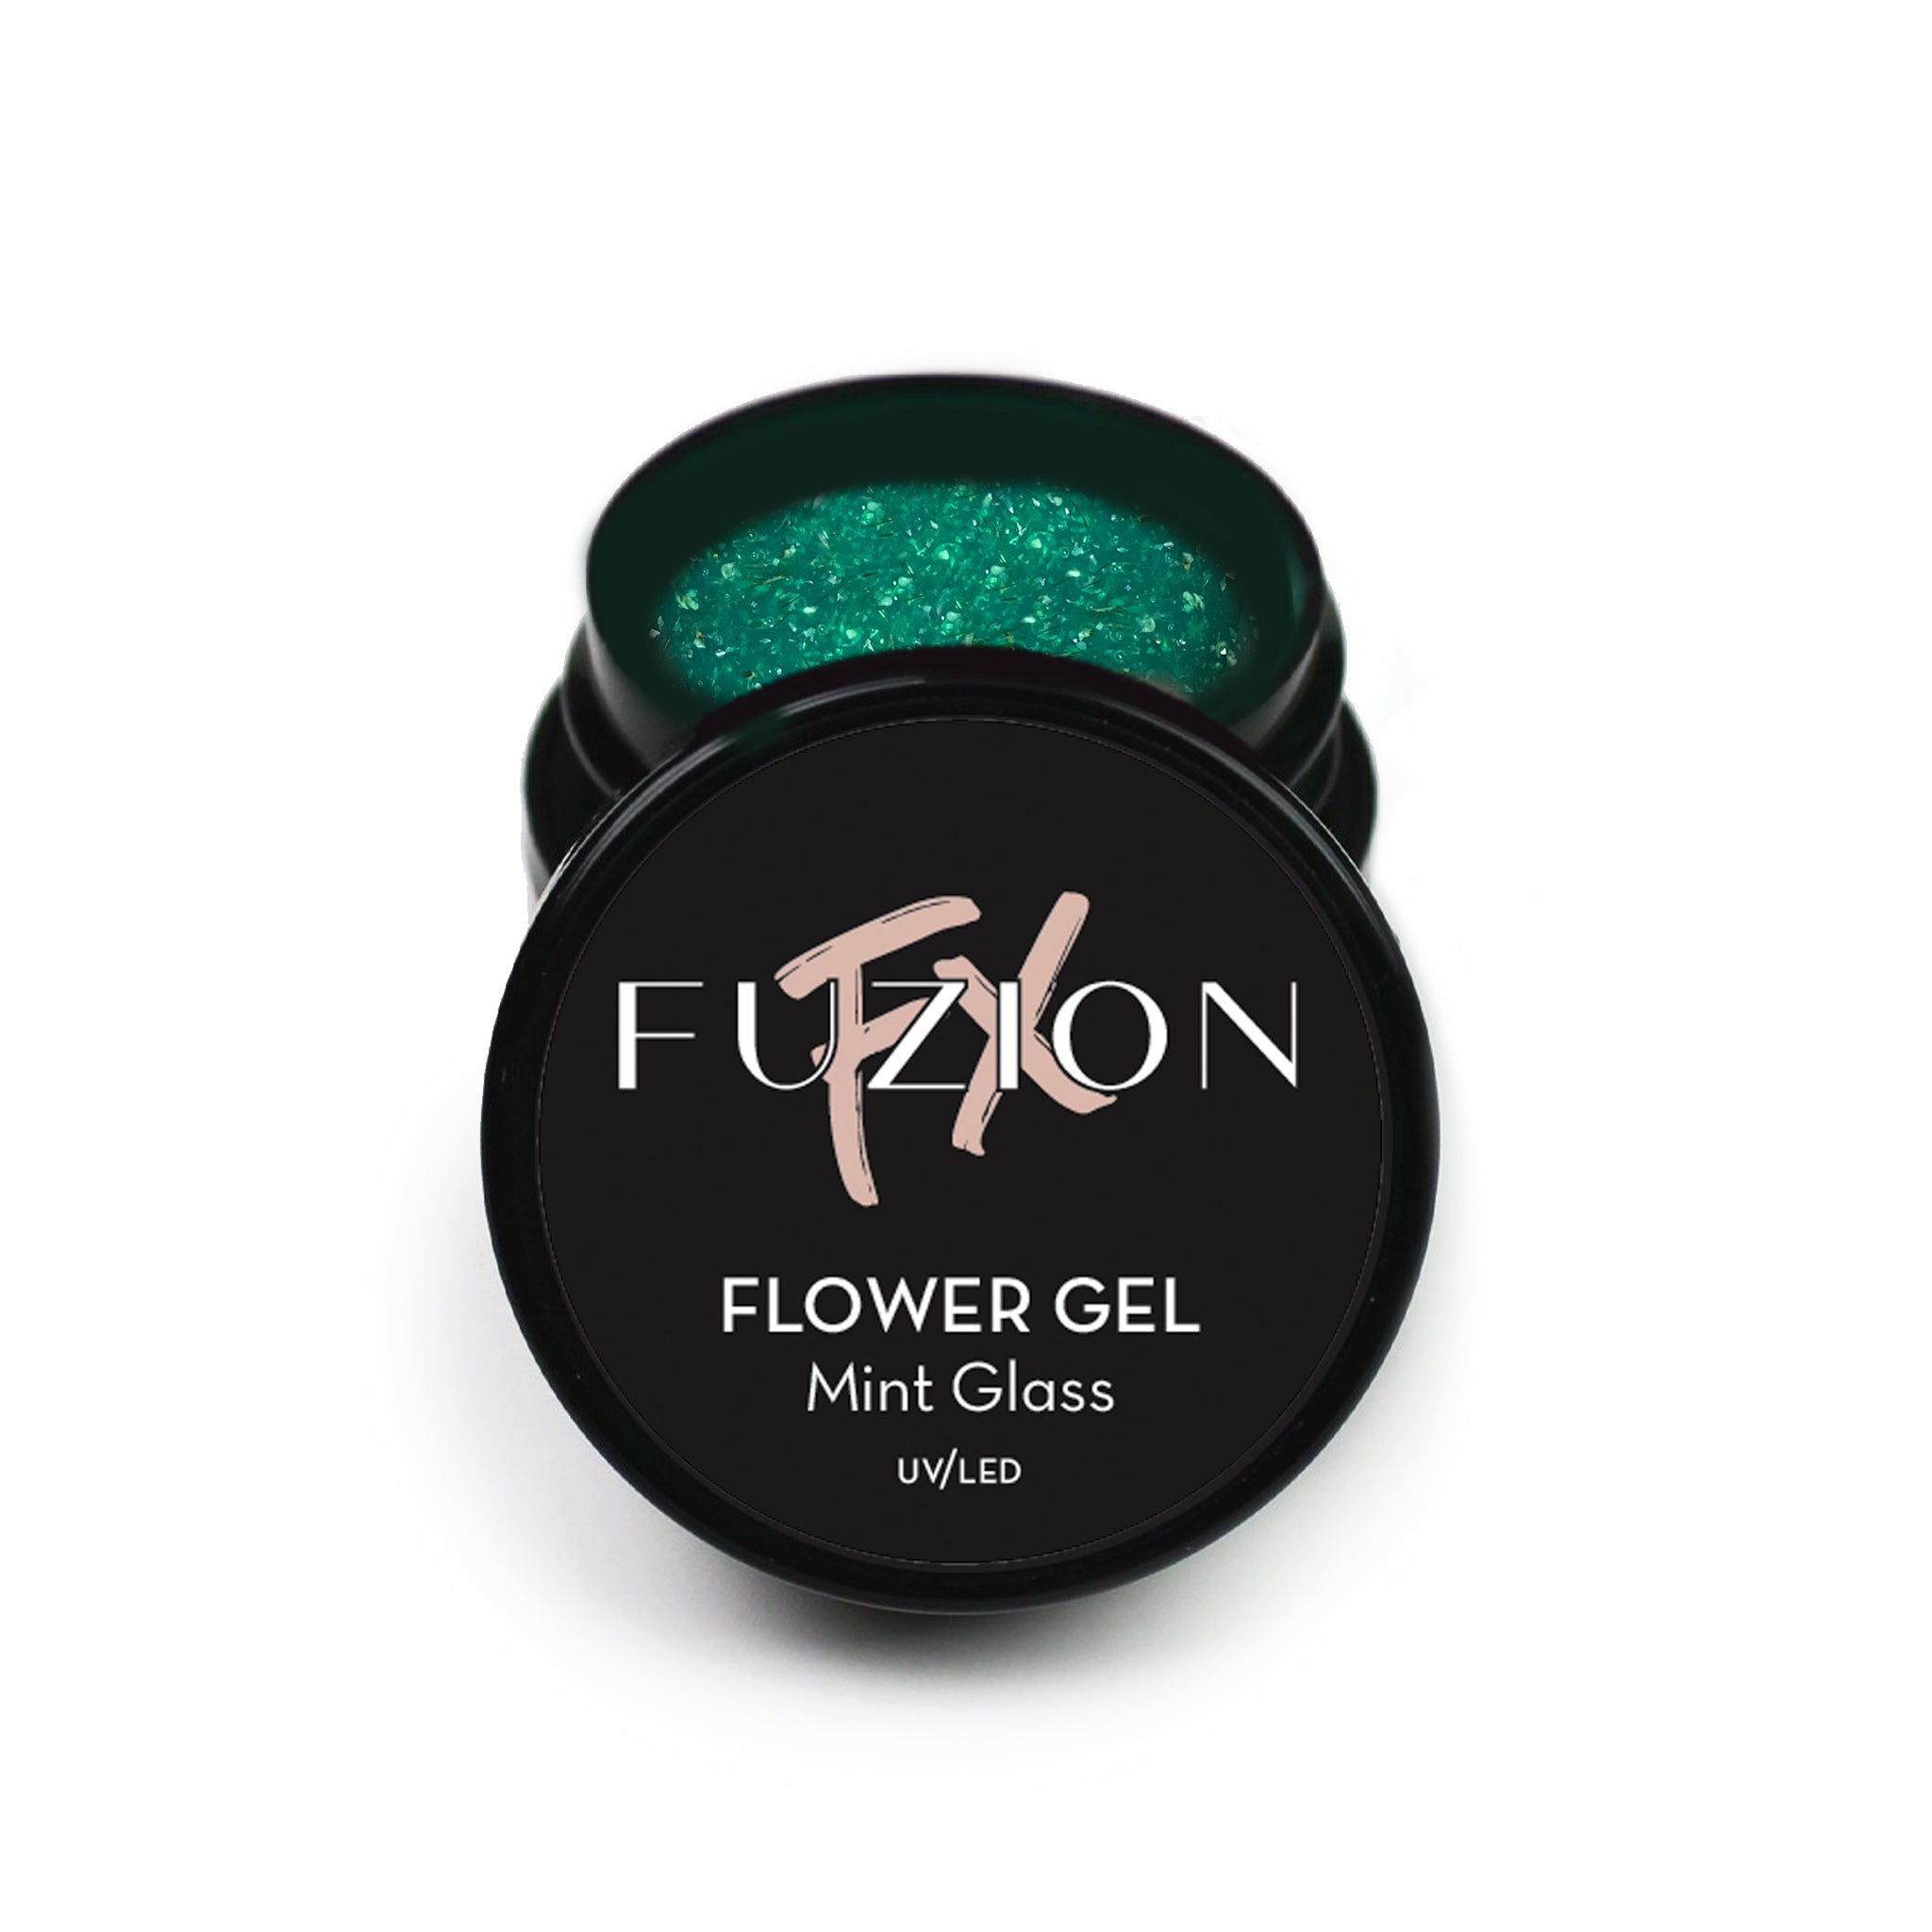 Fuzion FX - Flower Gel - Mint Glass - Creata Beauty - Professional Beauty Products